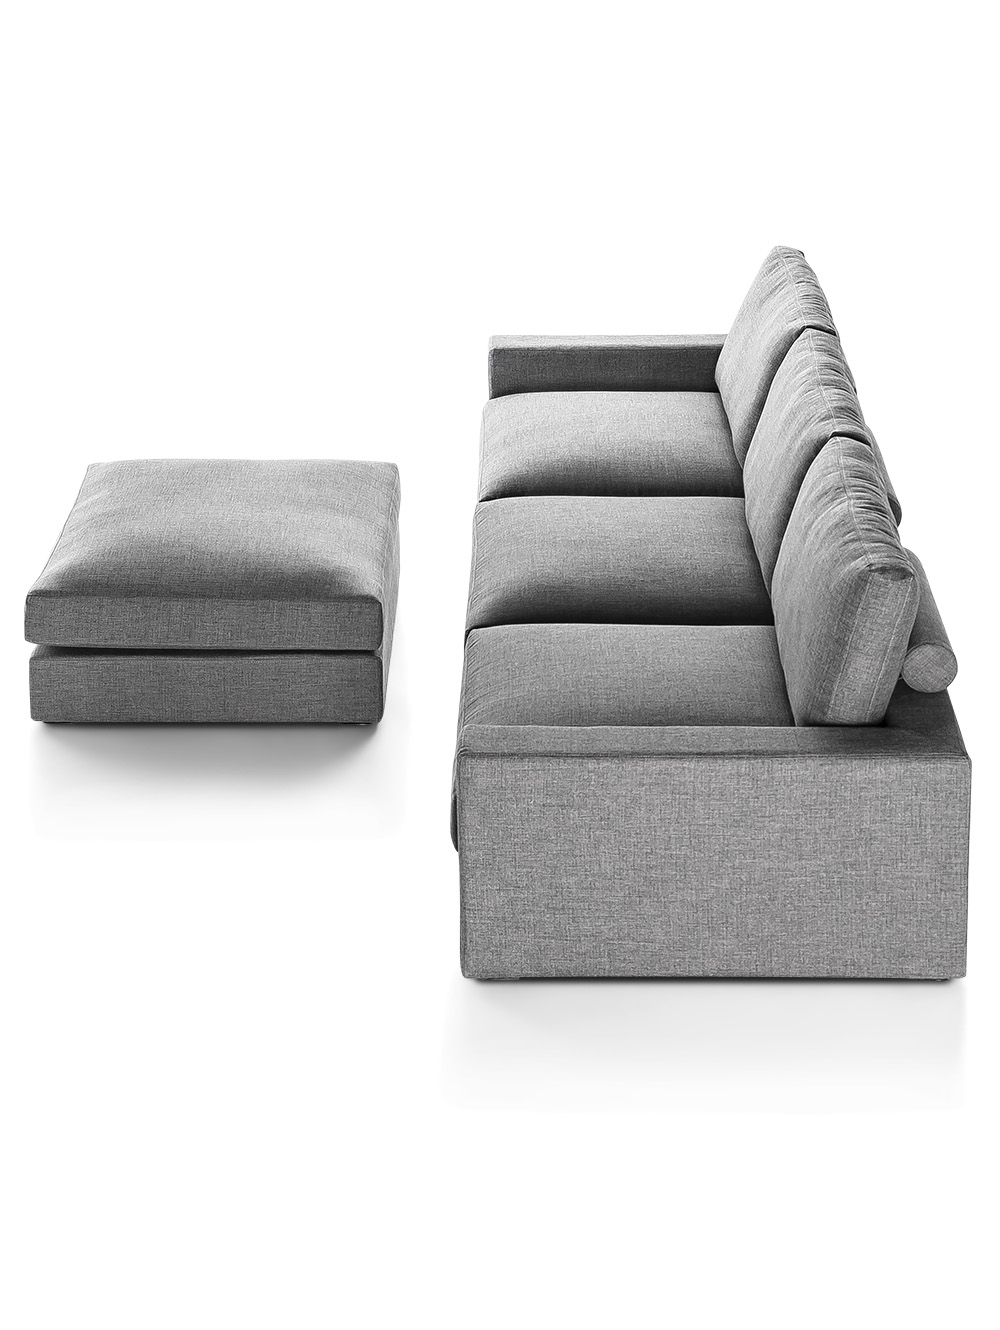 Sofa en ele gris oscuro-SOFA BELMONT SPAZIO PETROLEO-Landmark-6.jpg image number null